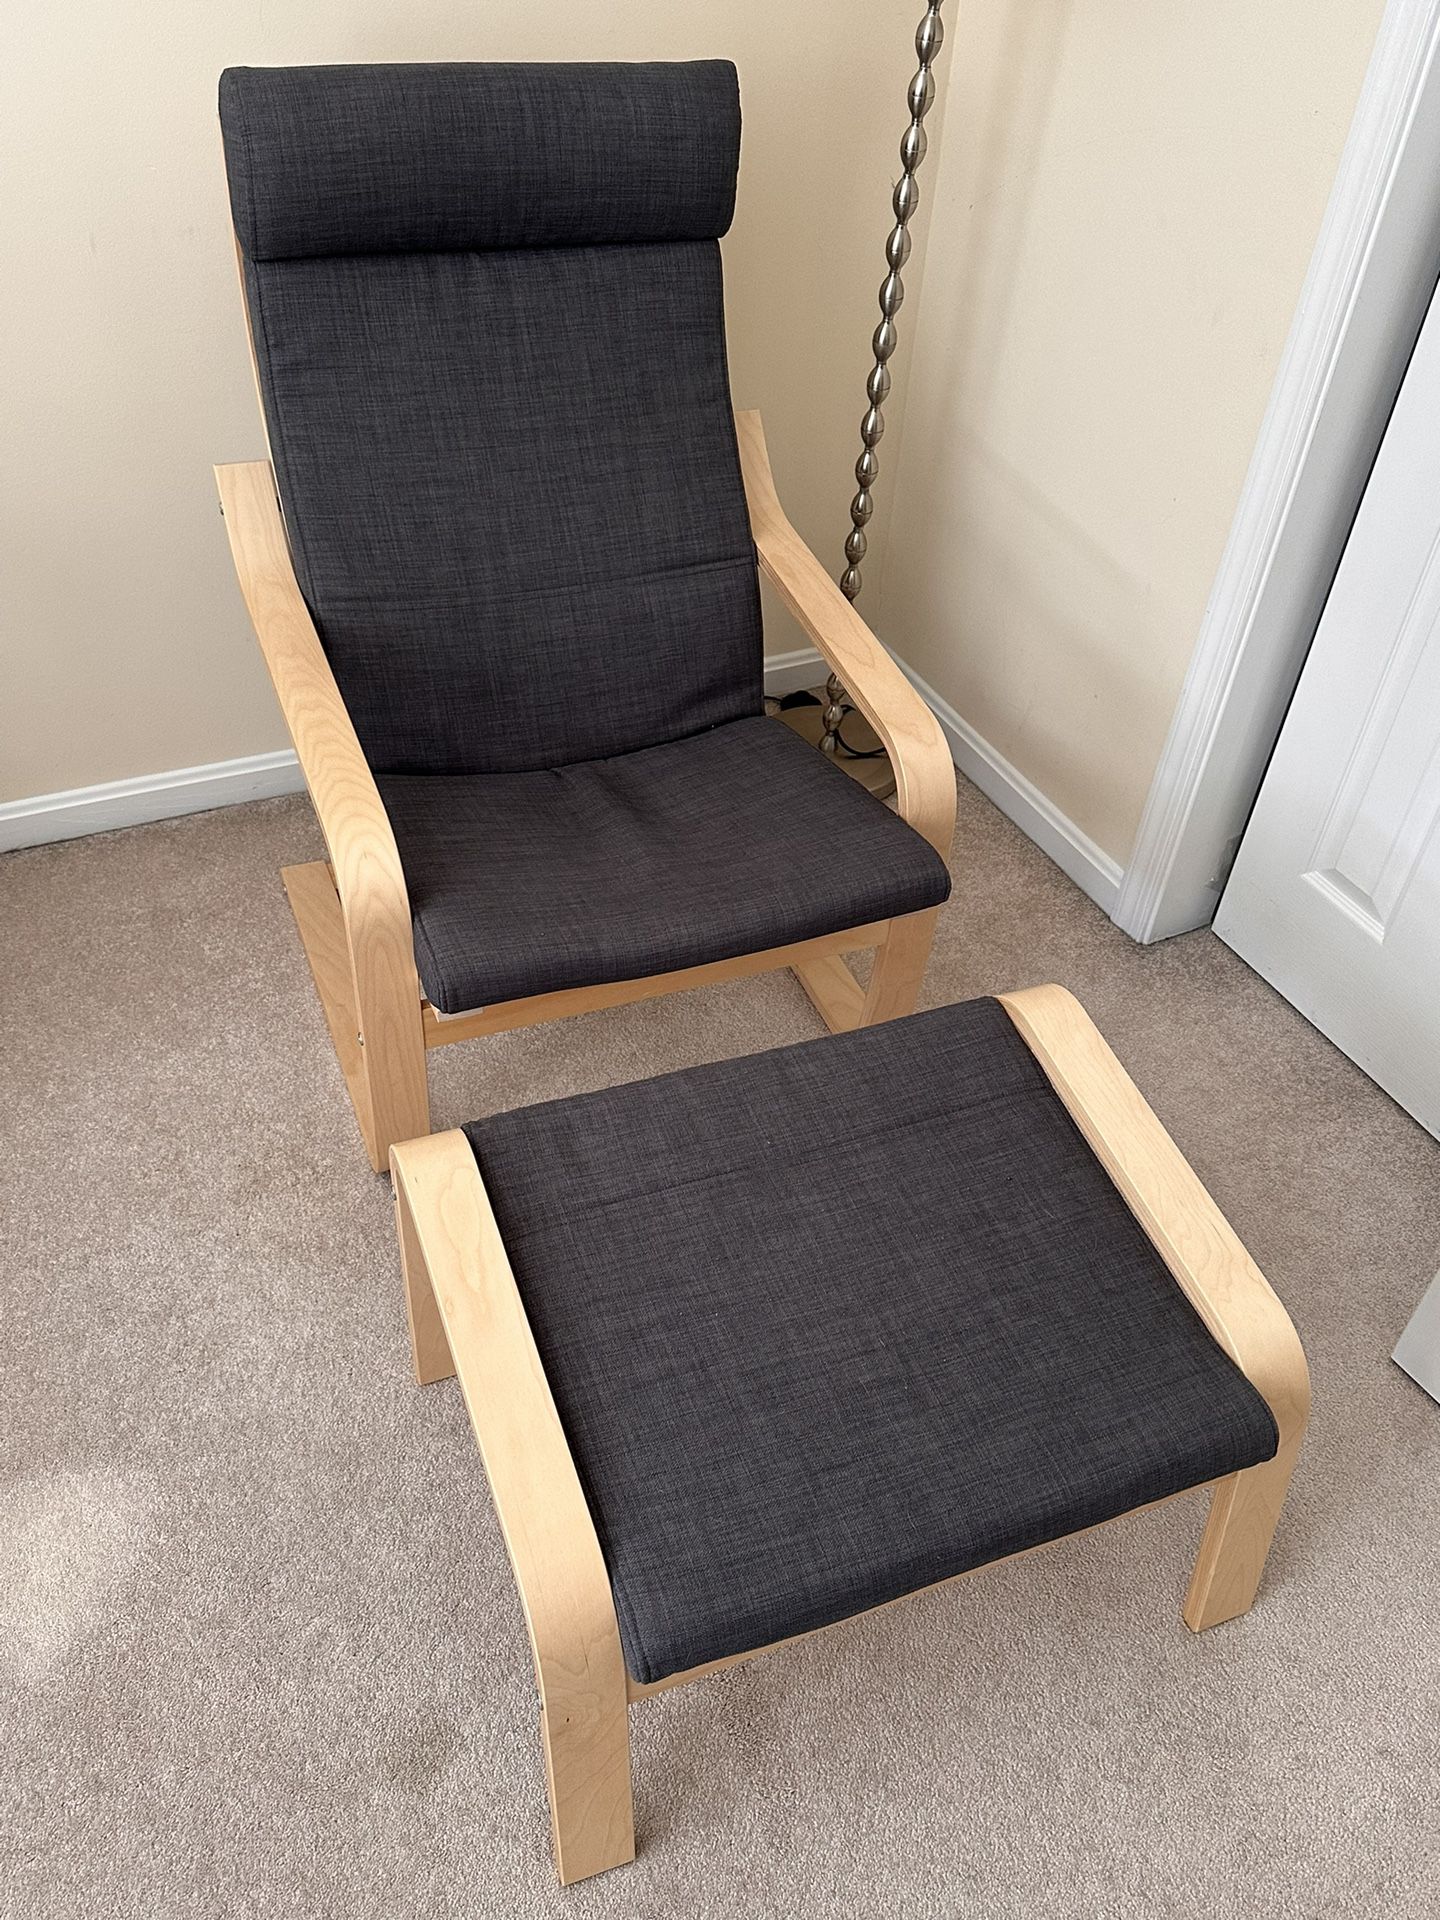 IKEA Arm Chair And Ottoman